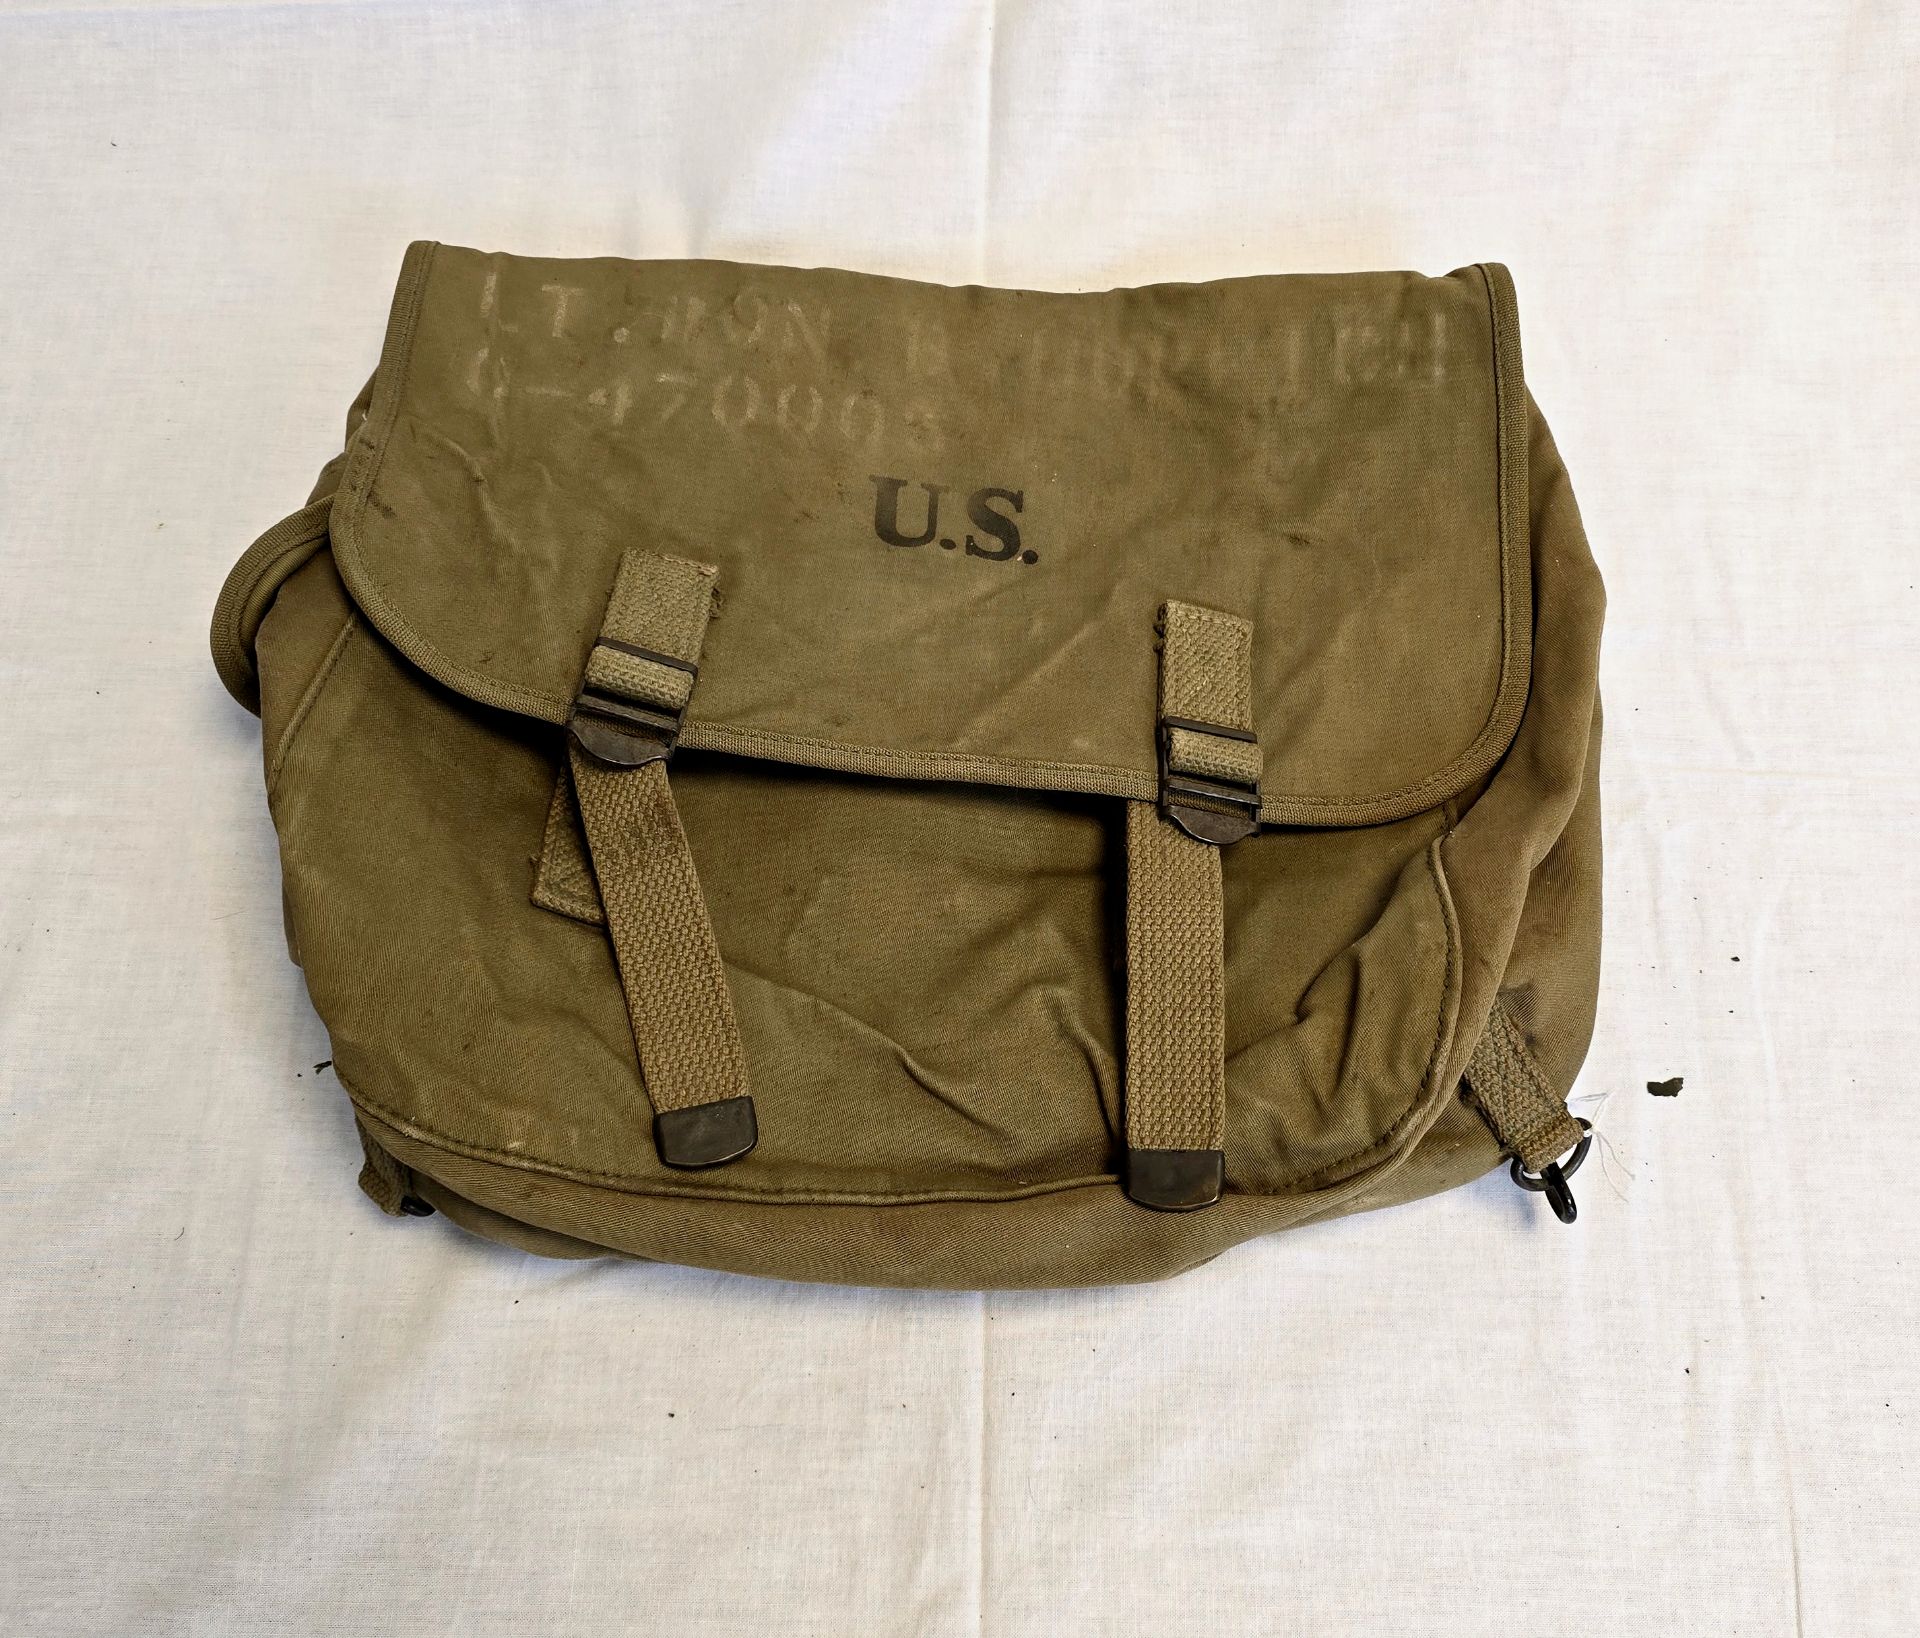 WW2 - US - équipement